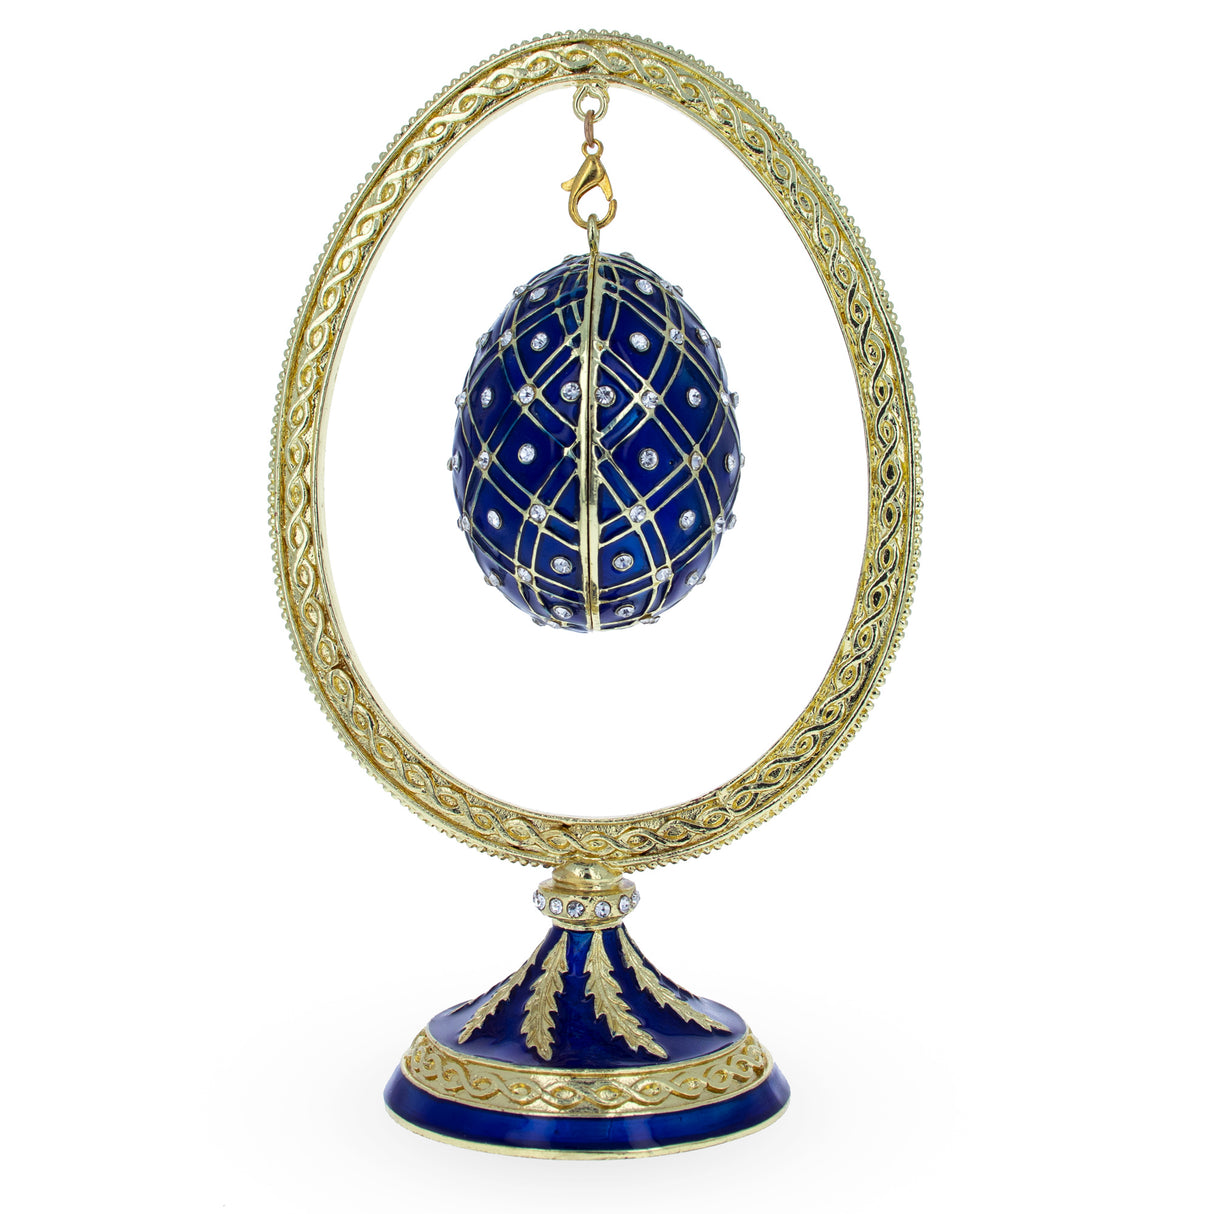 Pewter Blue Enamel Jeweled Easter Egg in the Egg Shaped Display Holder Figurine in Blue color Oval